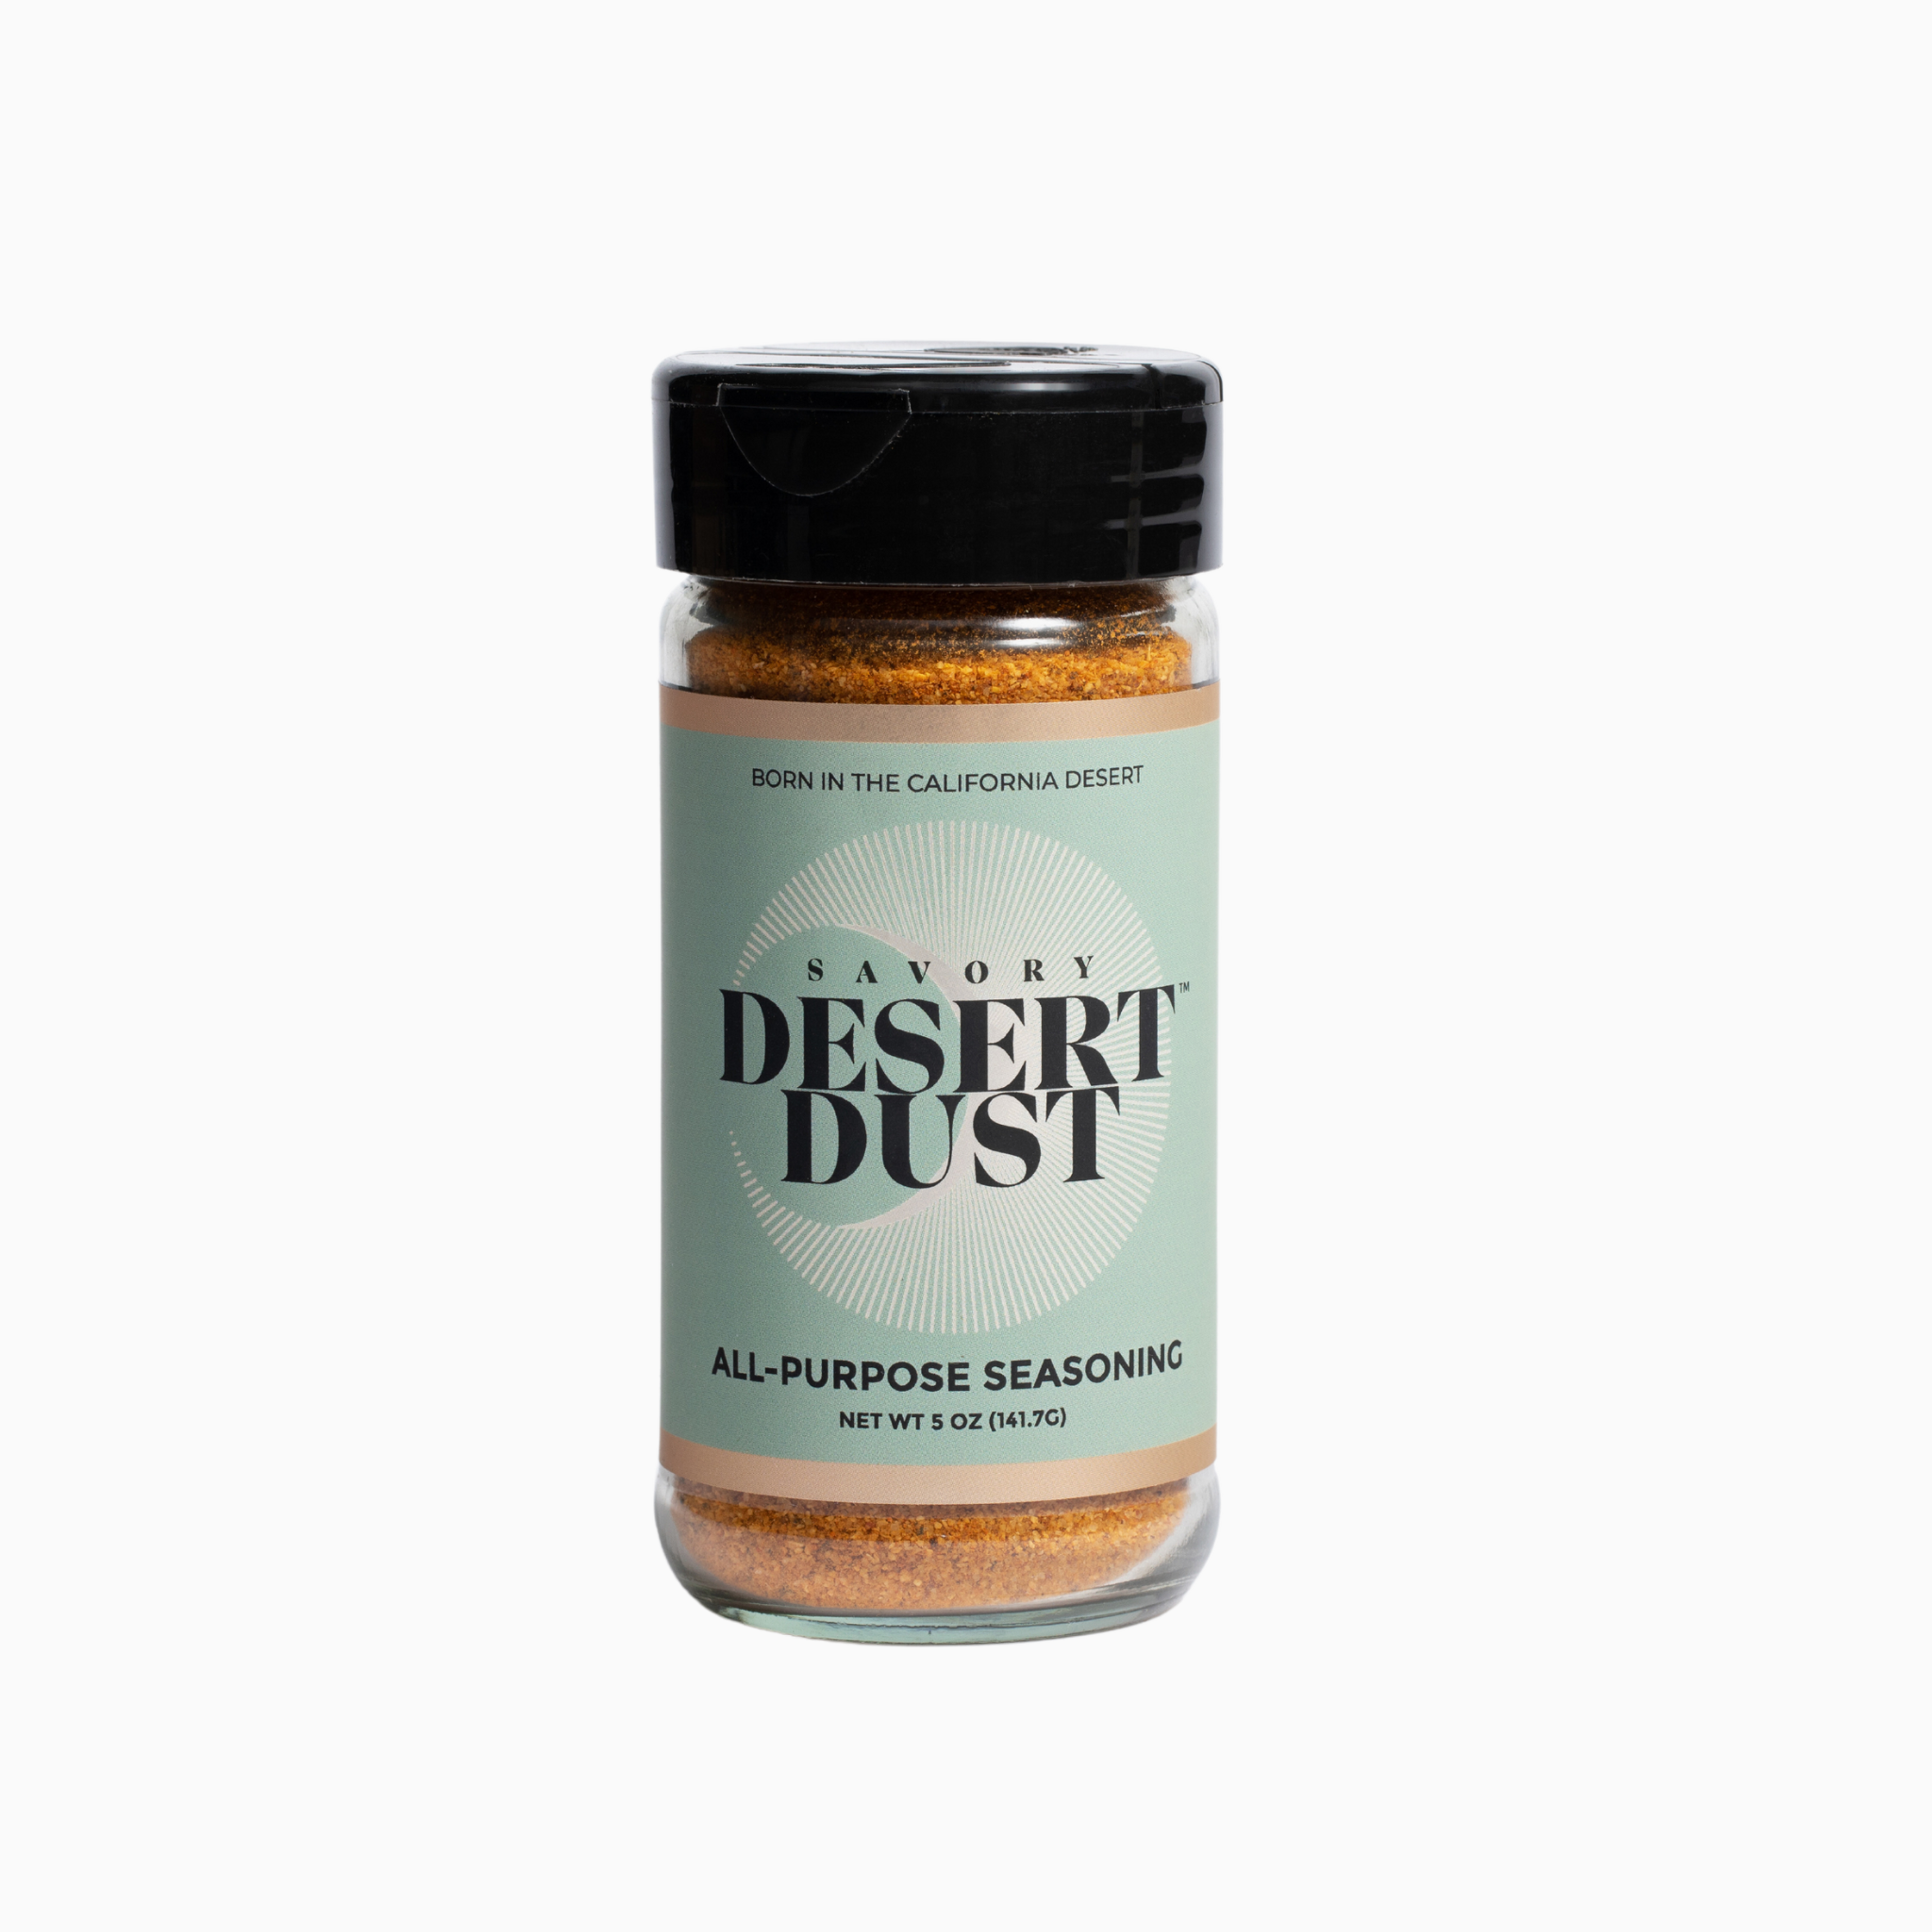 Savory Desert Dust Seasoning